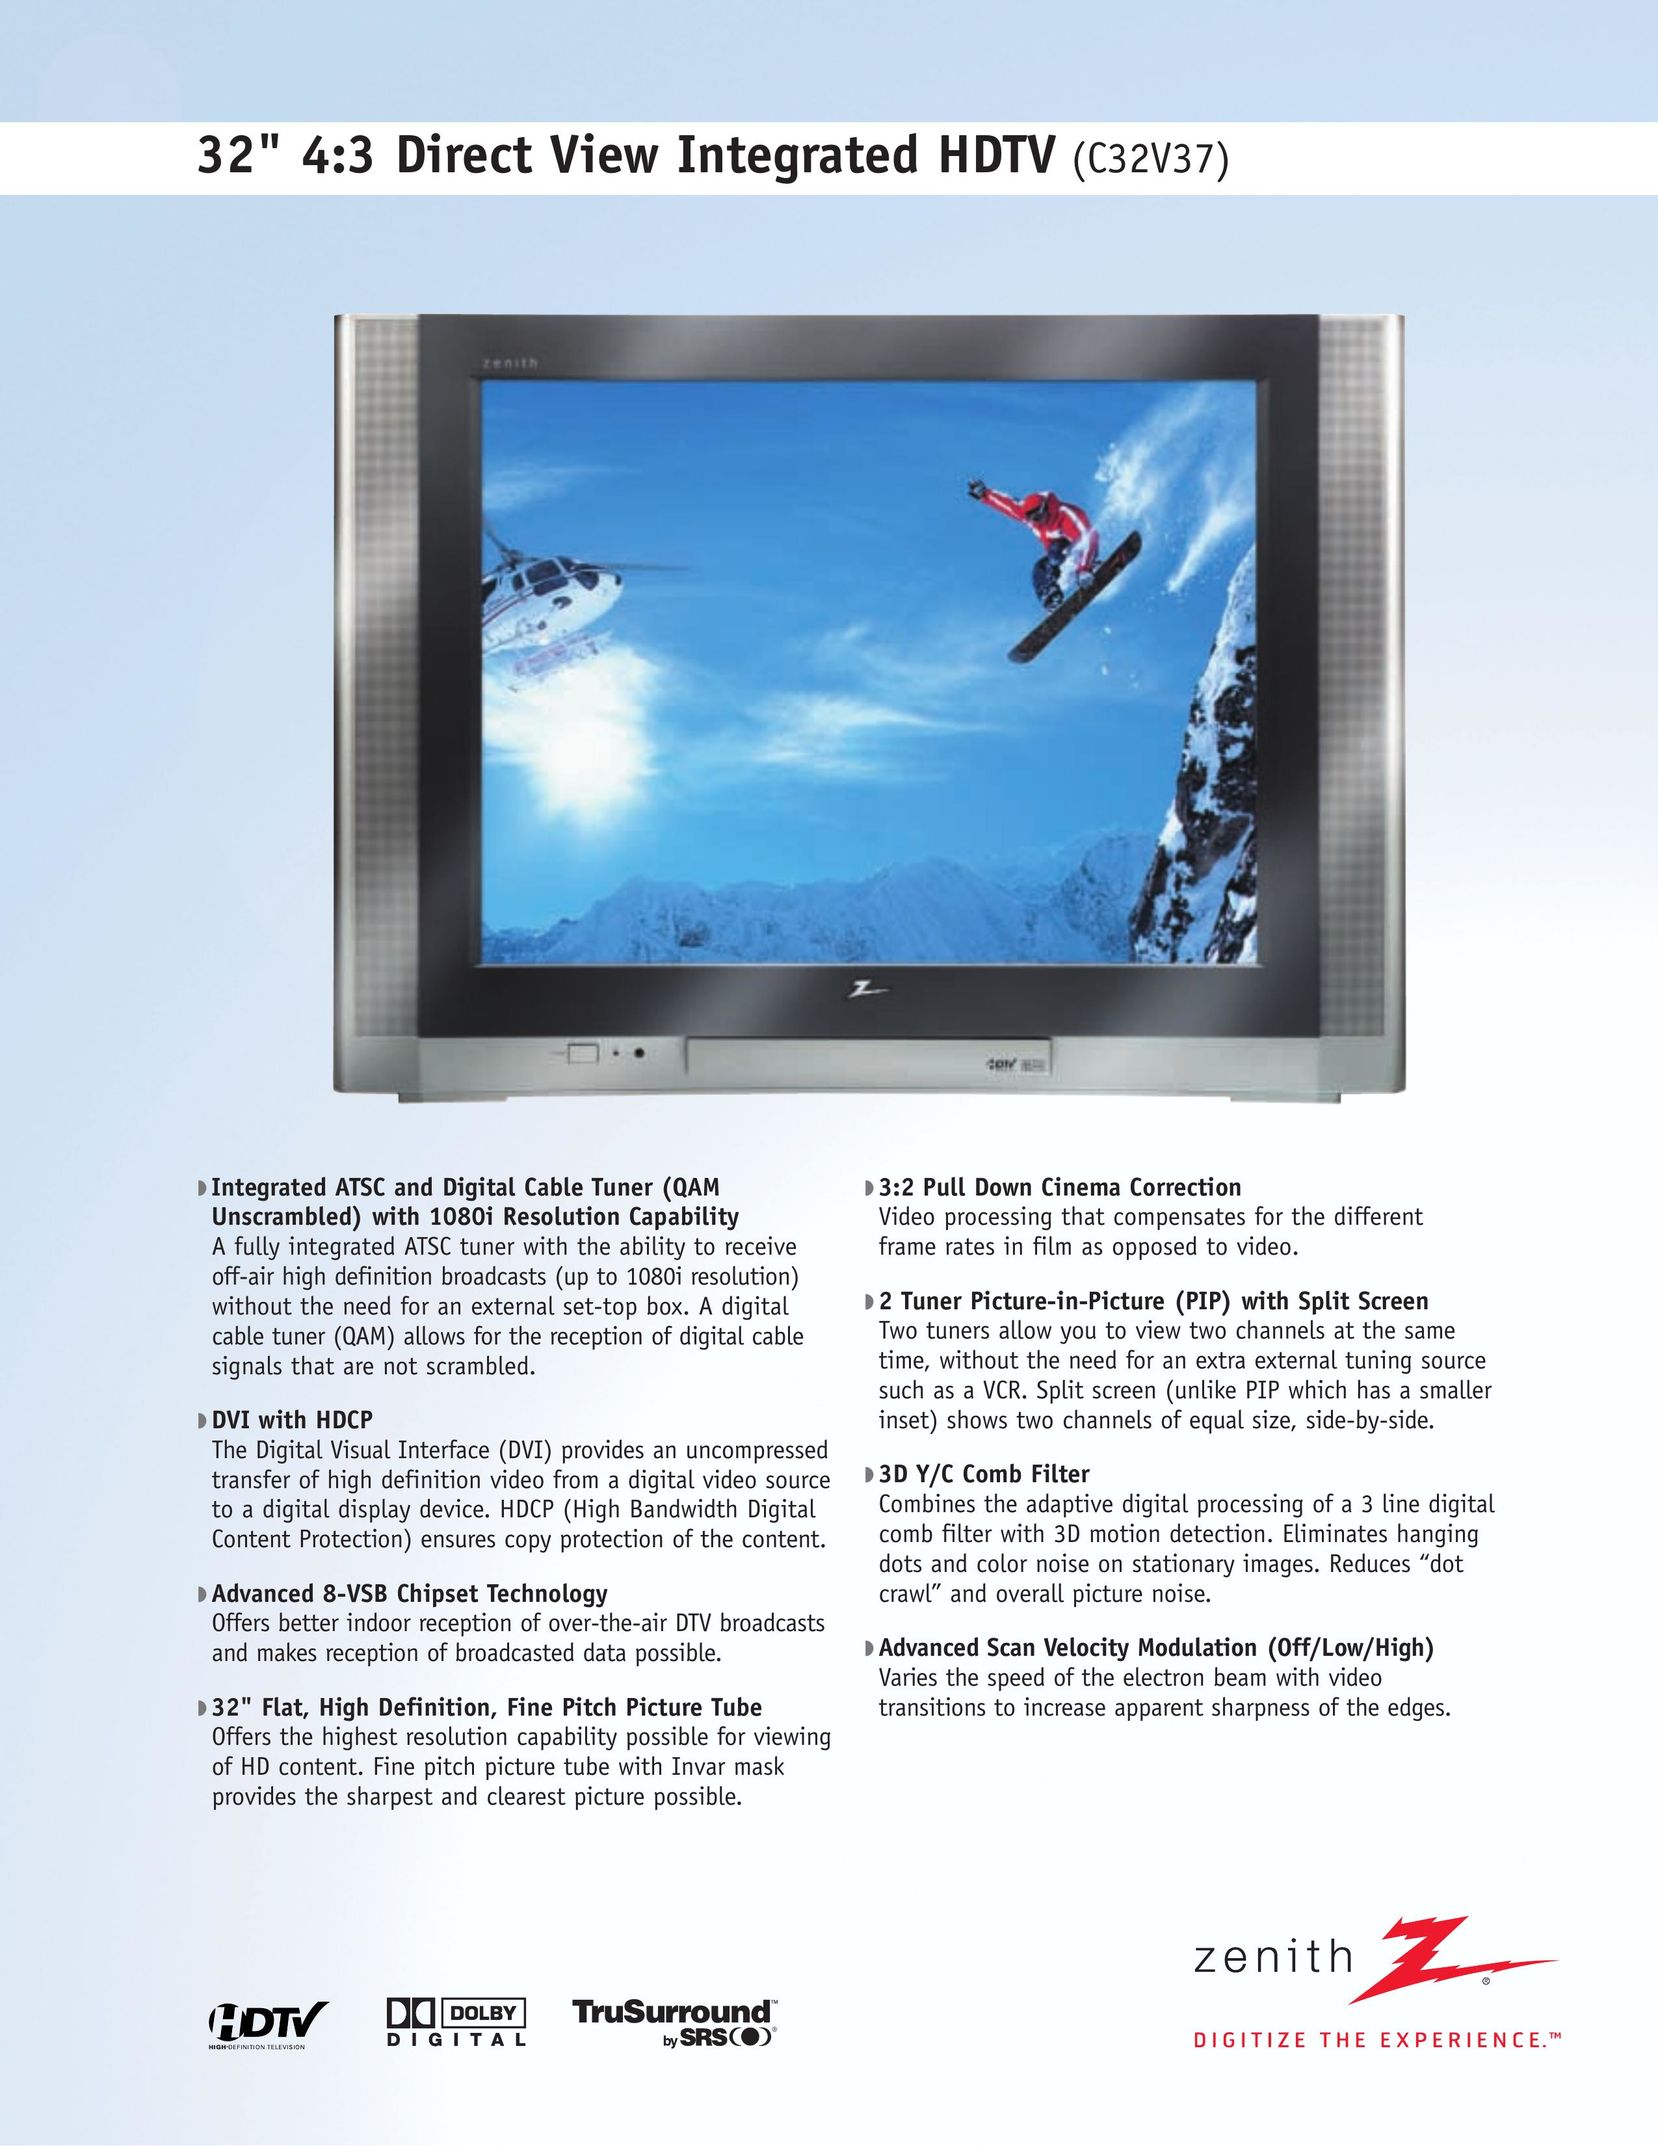 Zenith C32V37 Flat Panel Television User Manual